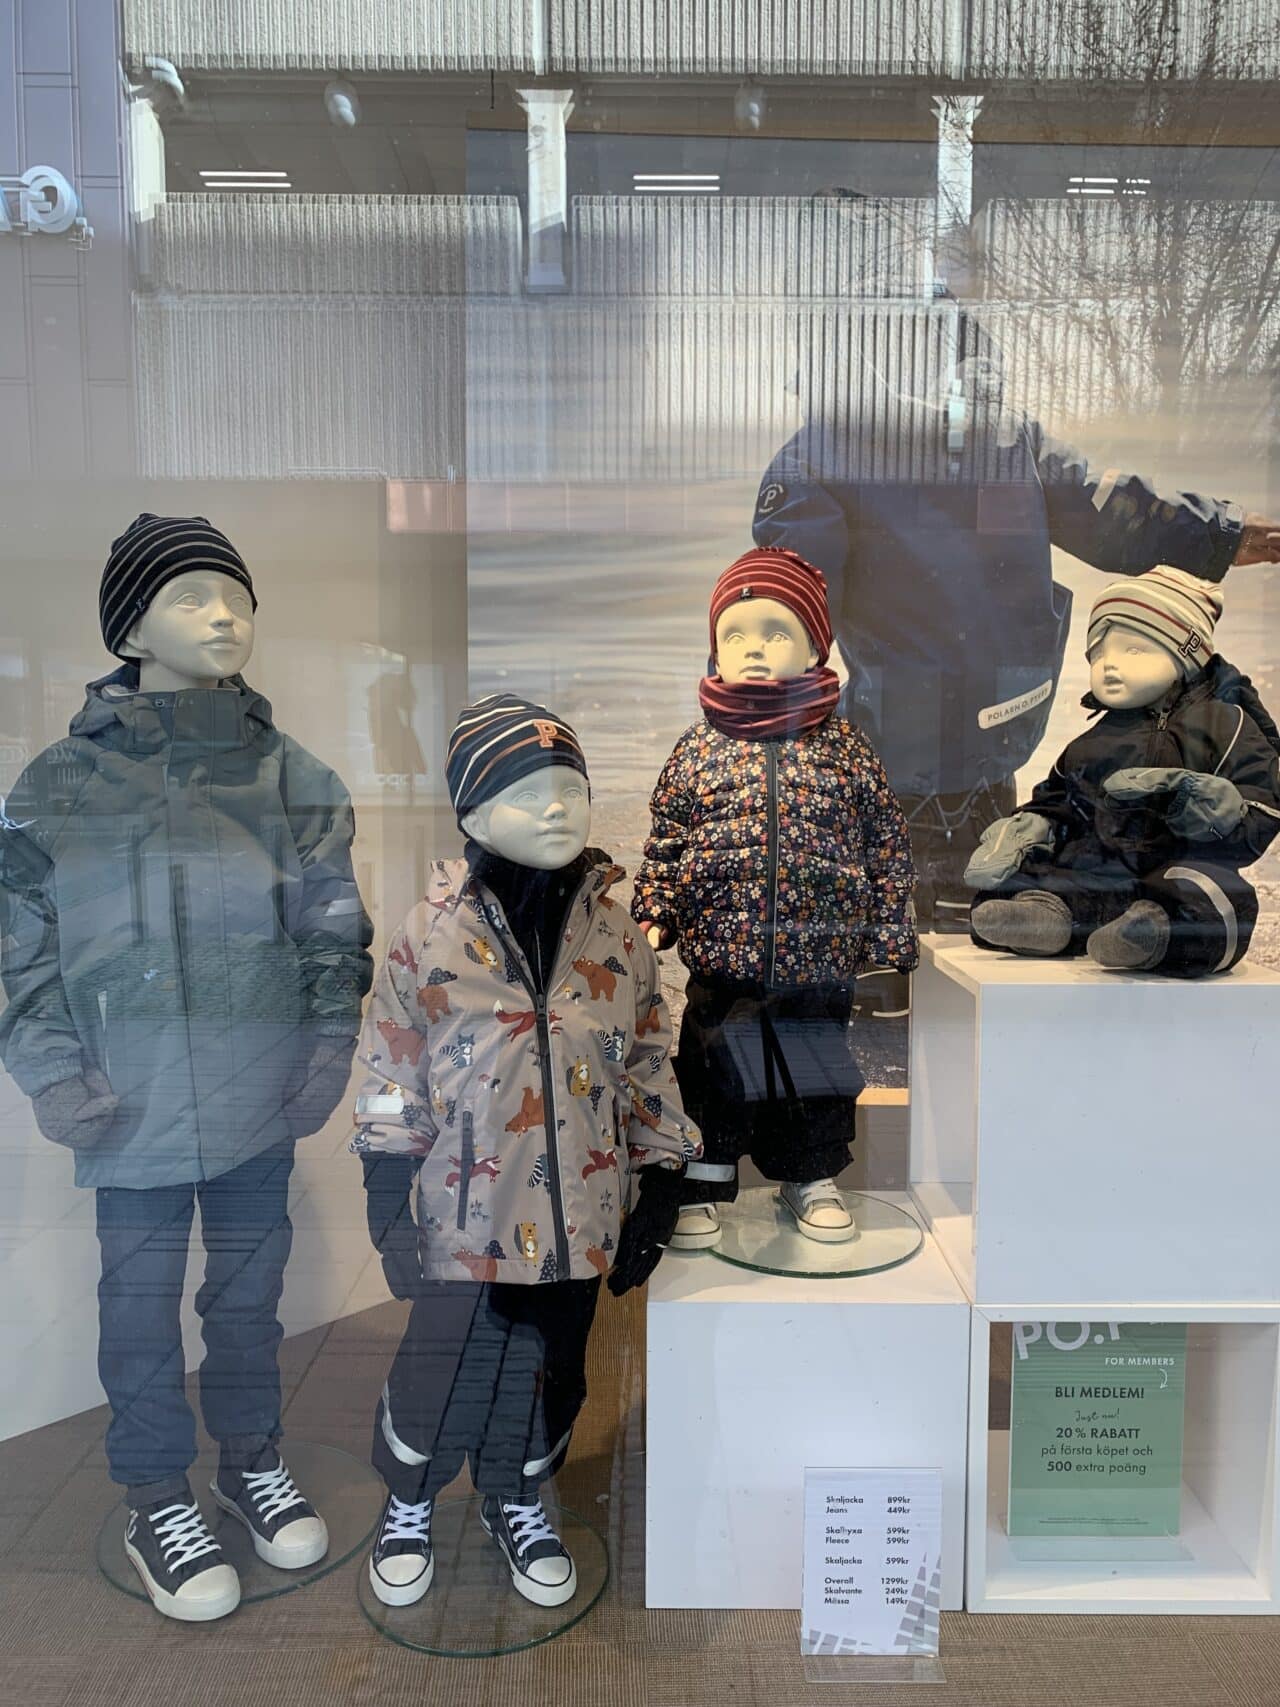 Children Winter Clothing In Store Window